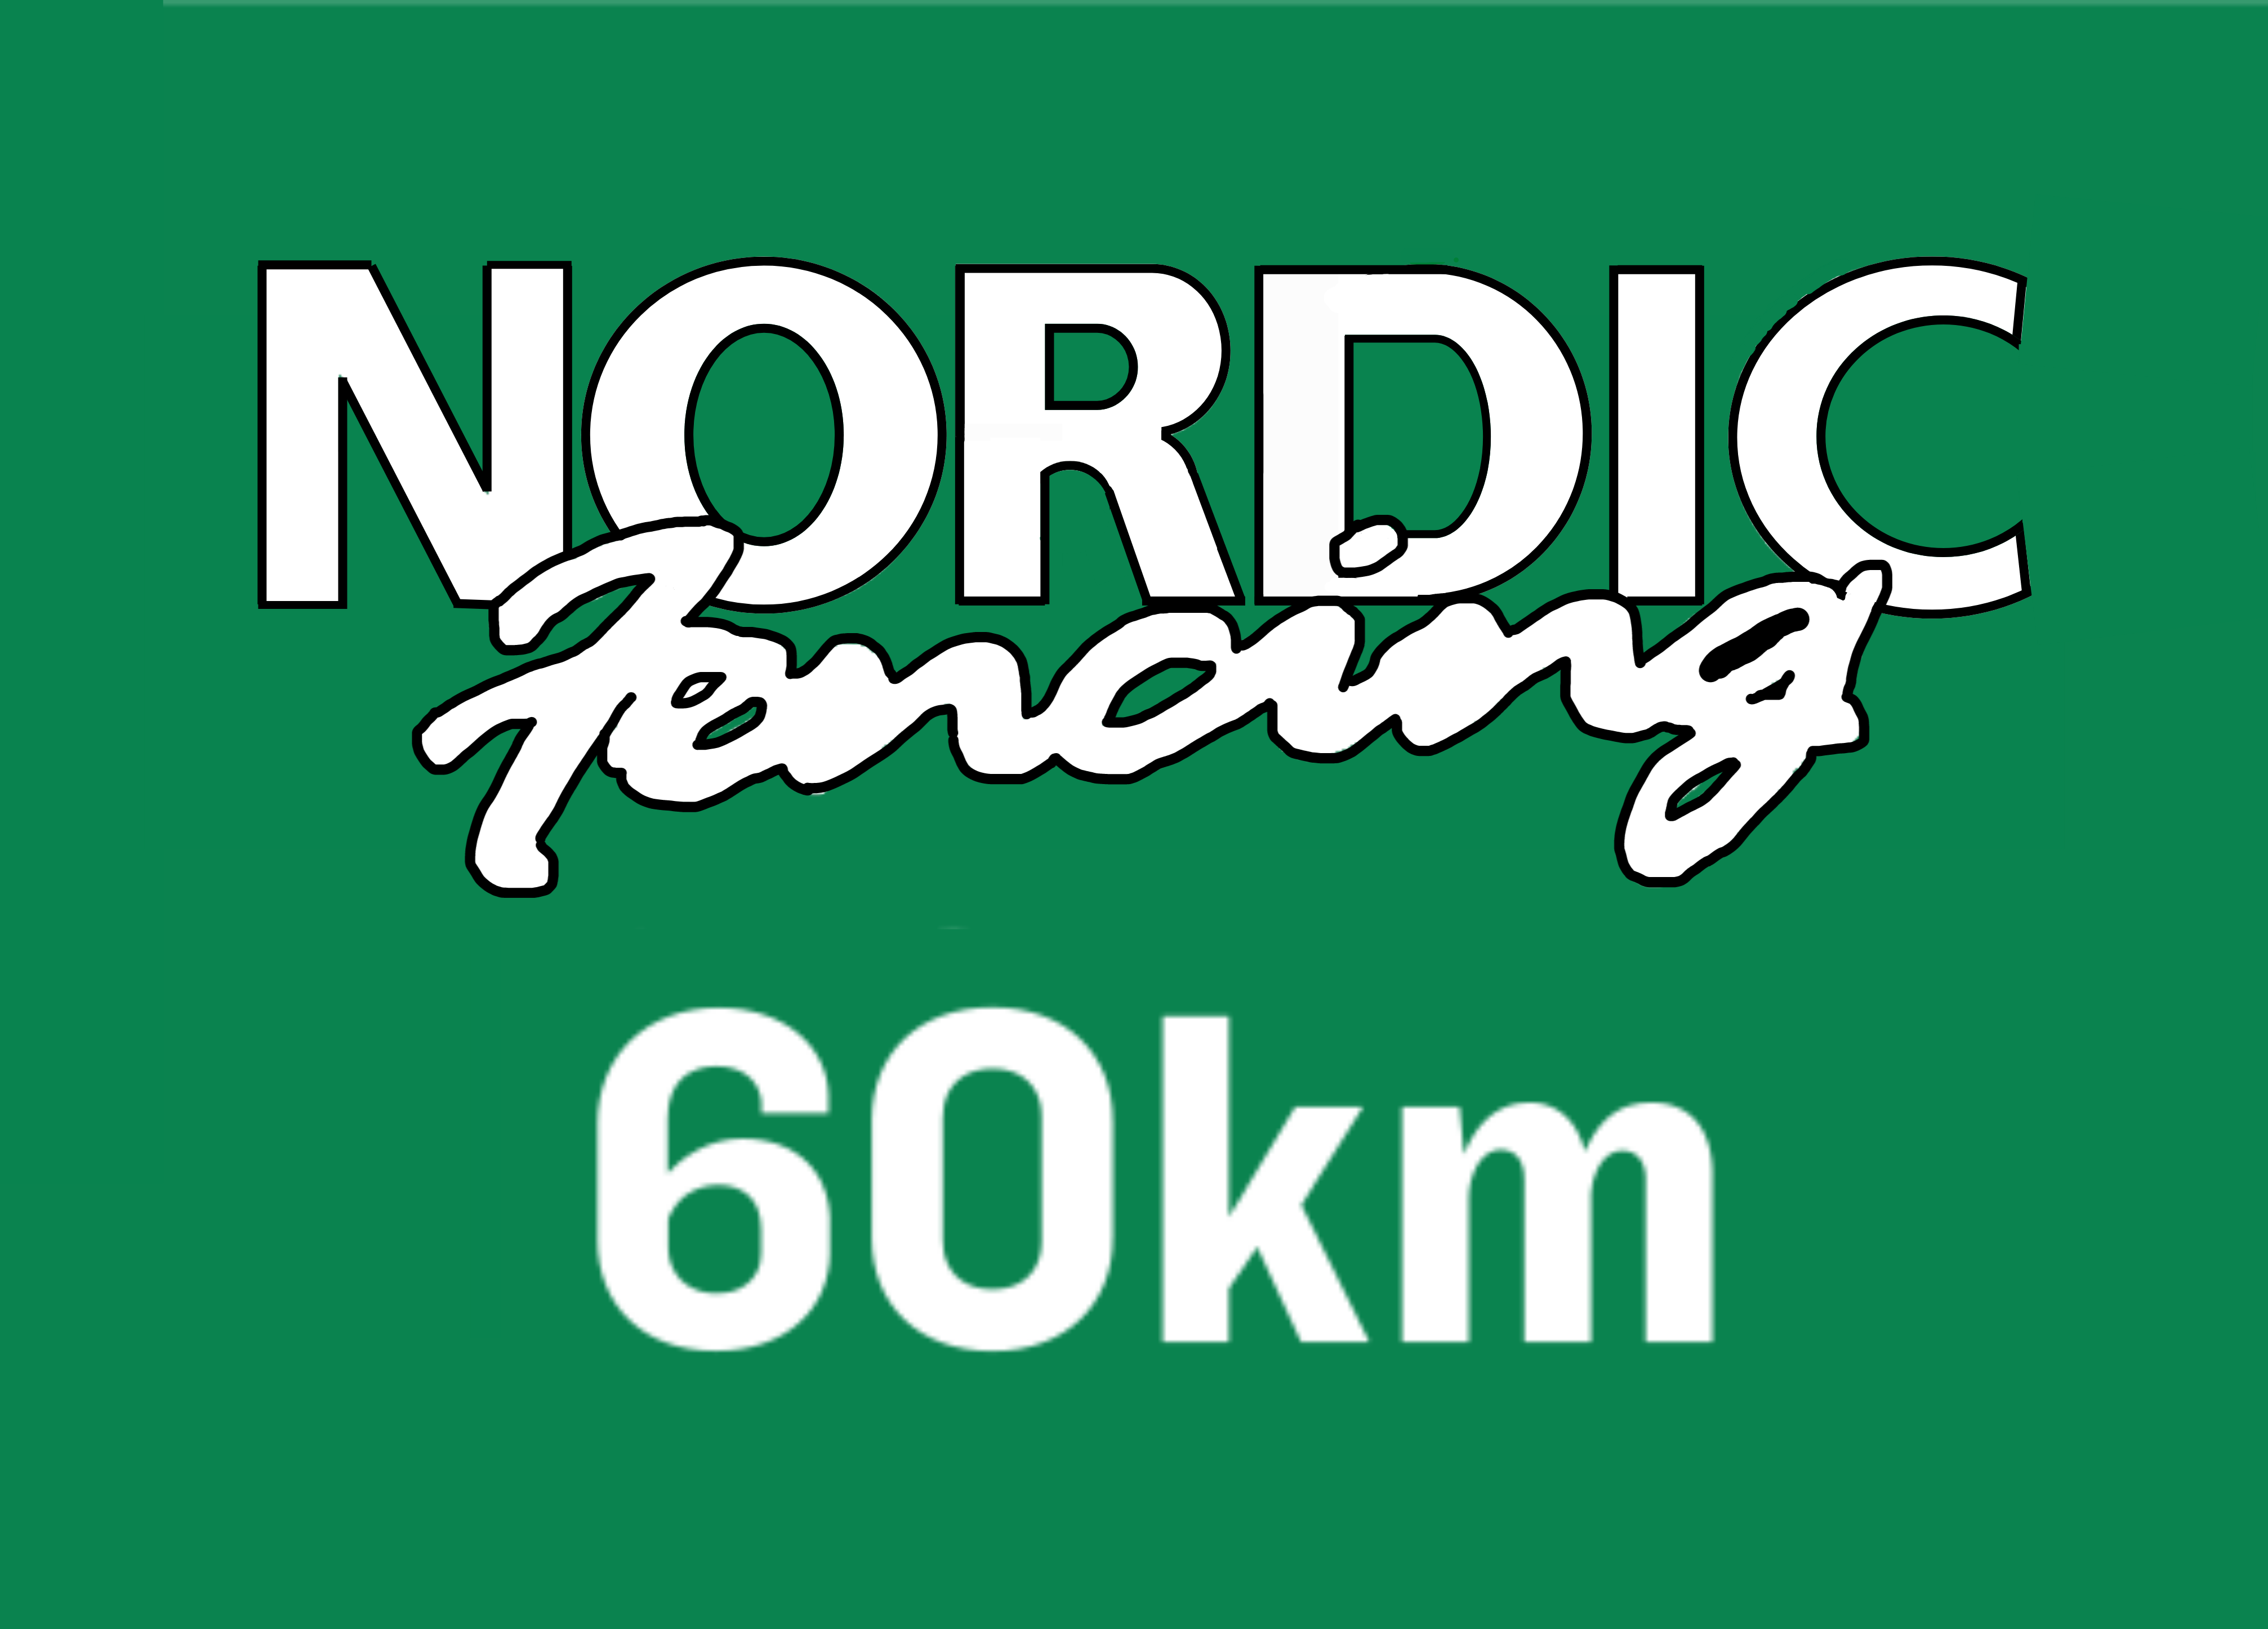 60km Nordic fencing (1)